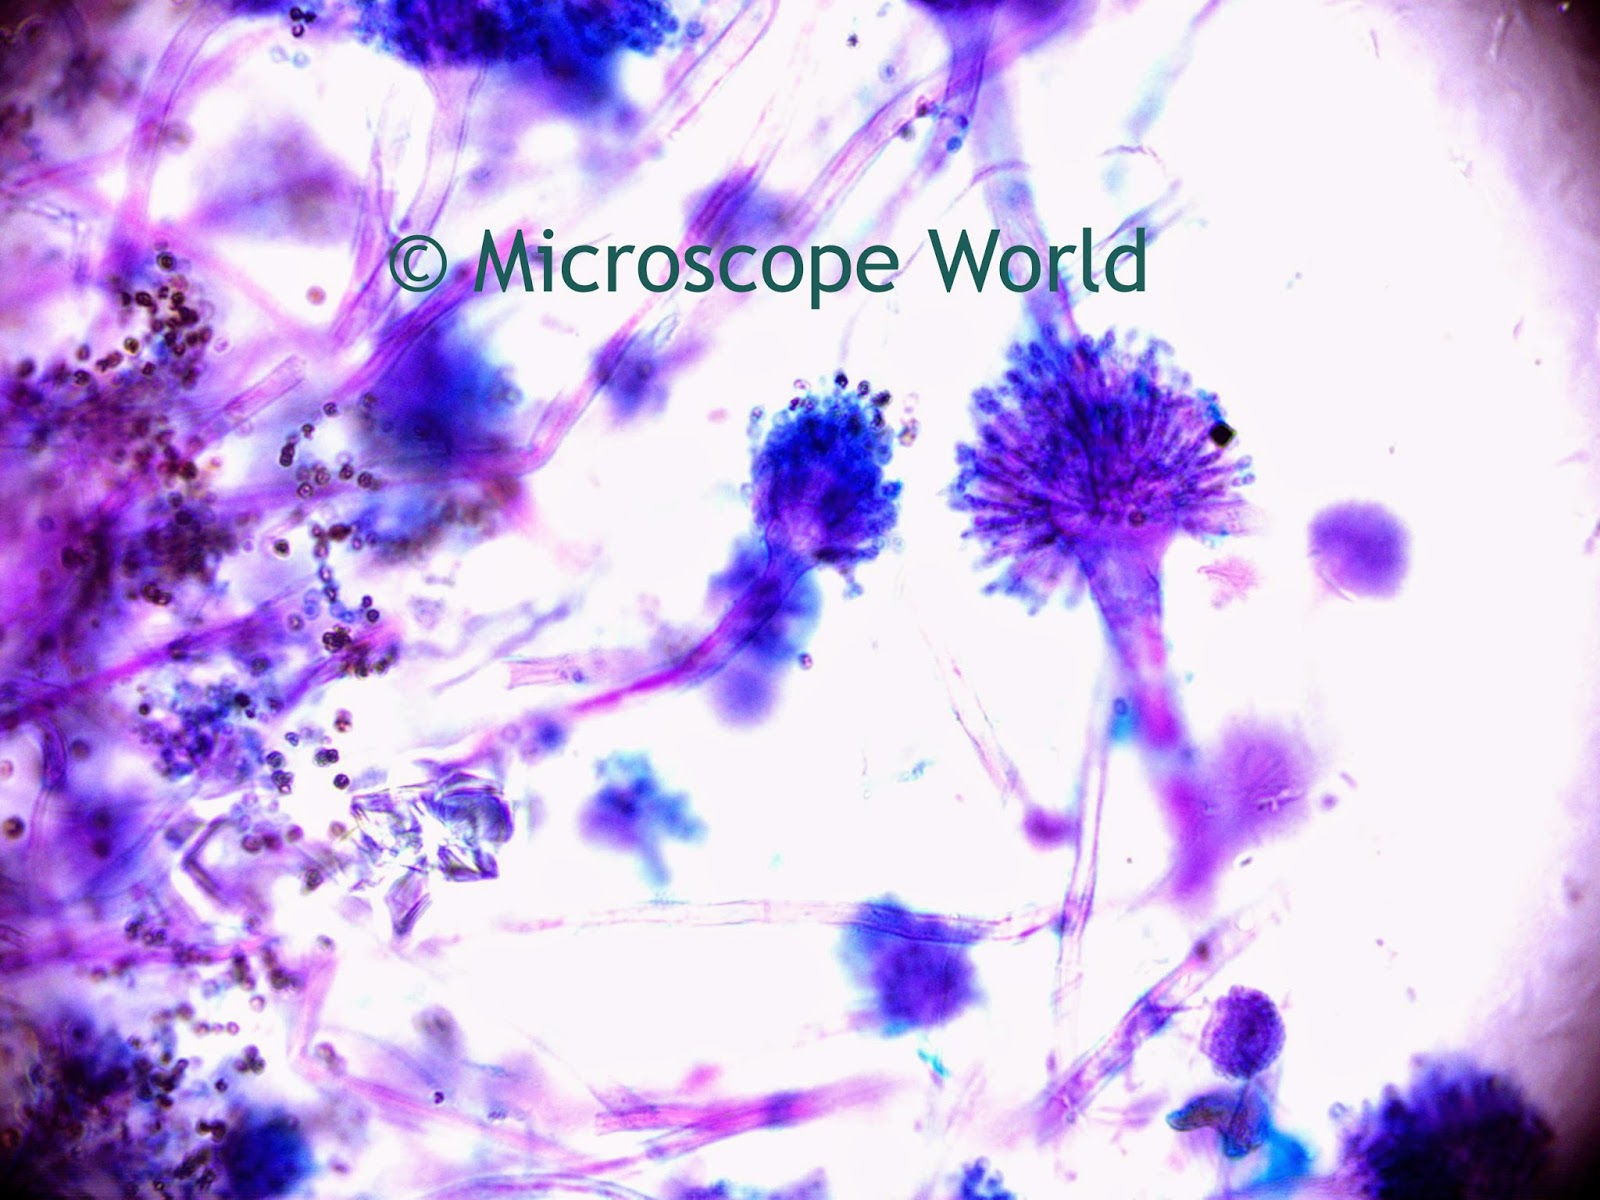 400x image of Aspergillus (mold) under microscope